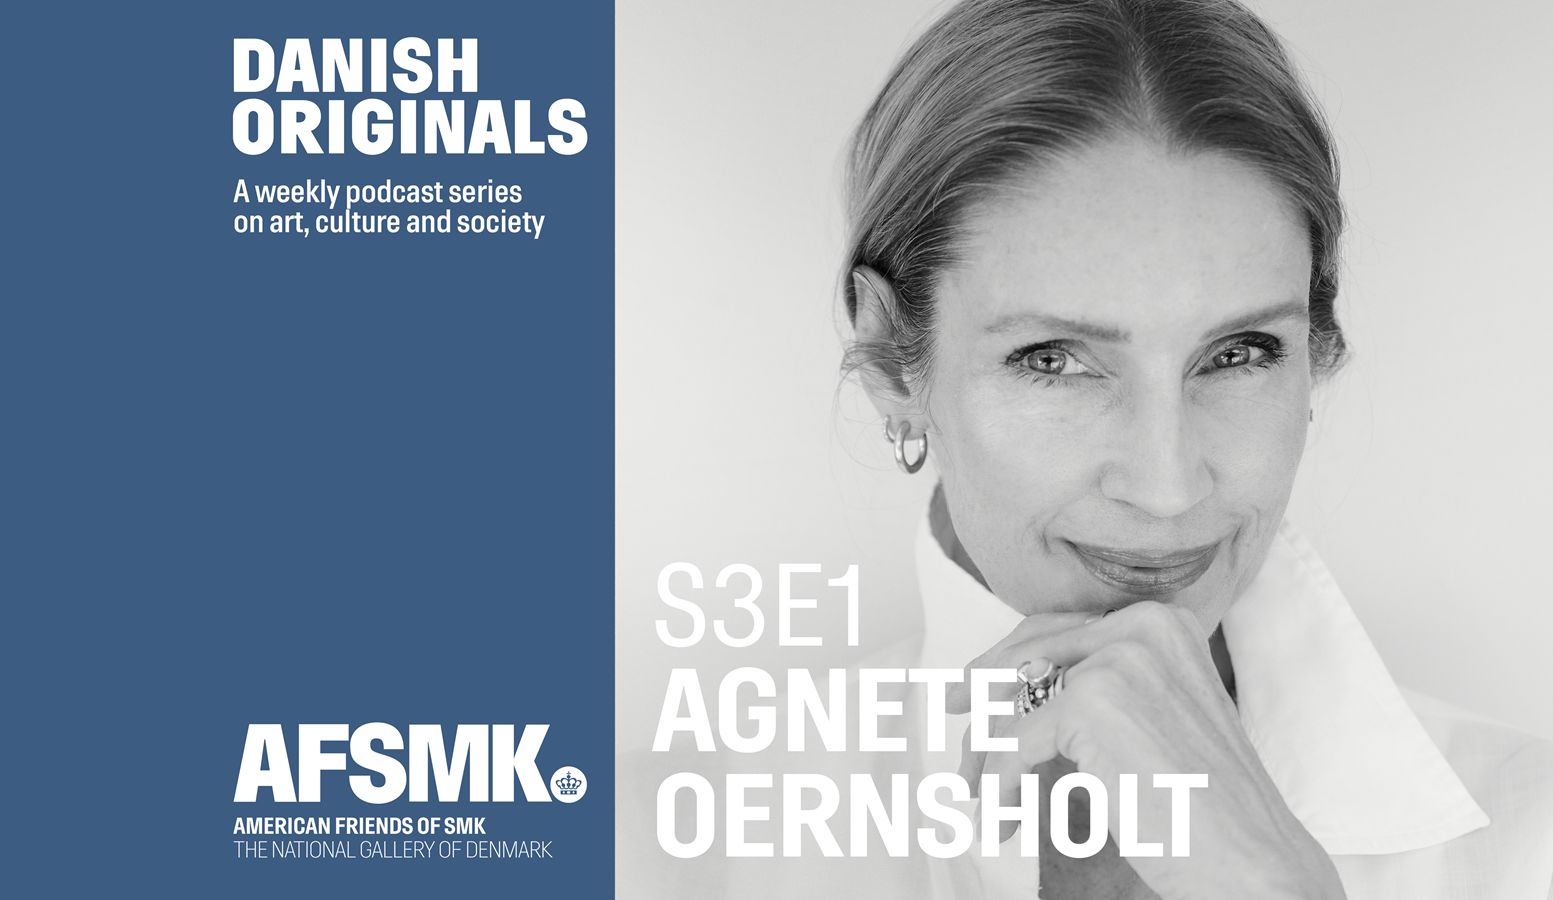 Danish Originals S3 E1: Agnete Oernsholt